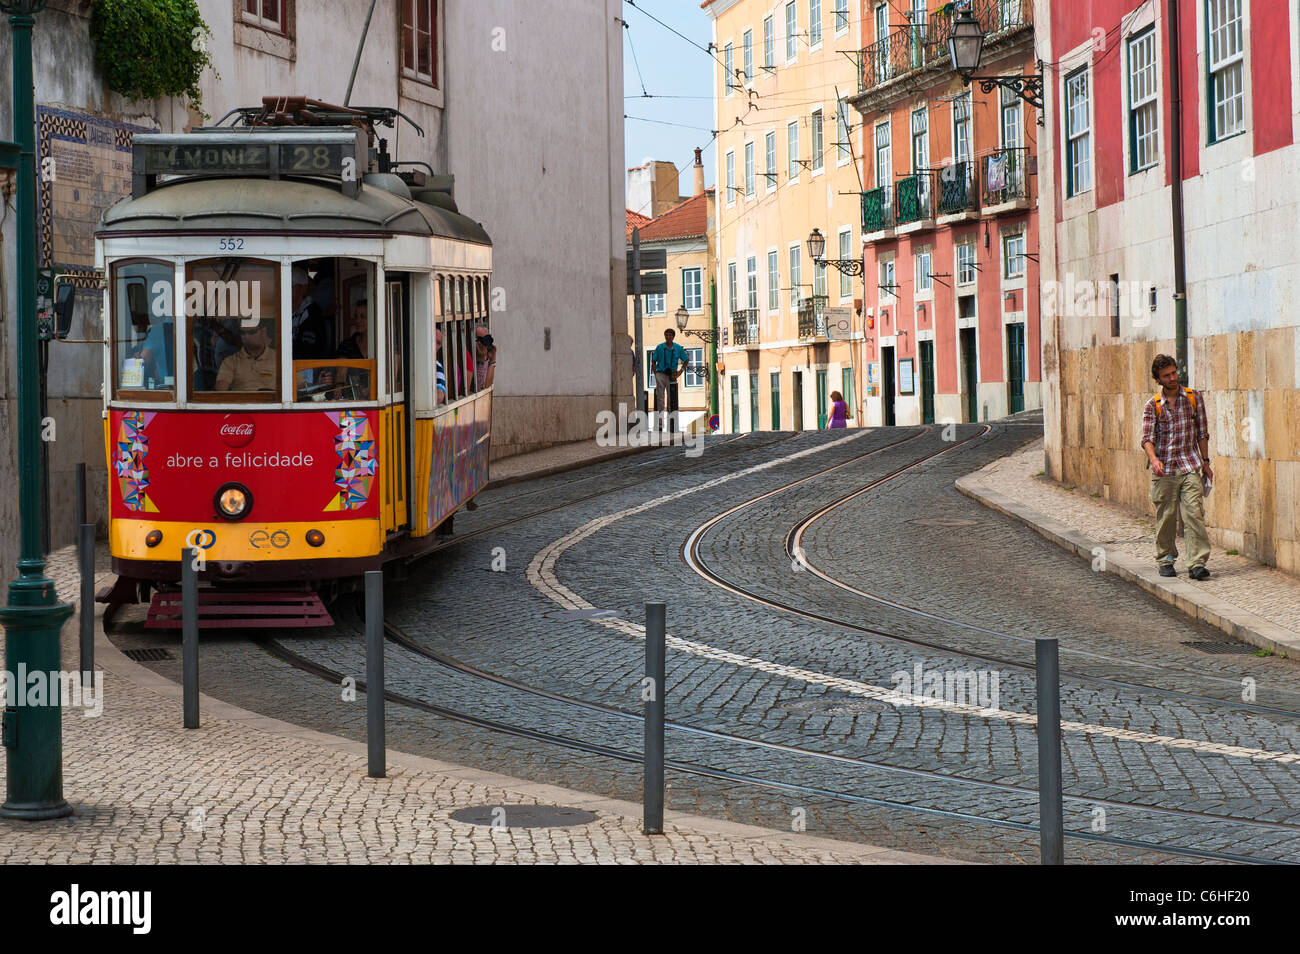 Tram in a street in Alfama district, Lisbon, Portugal Stock Photo